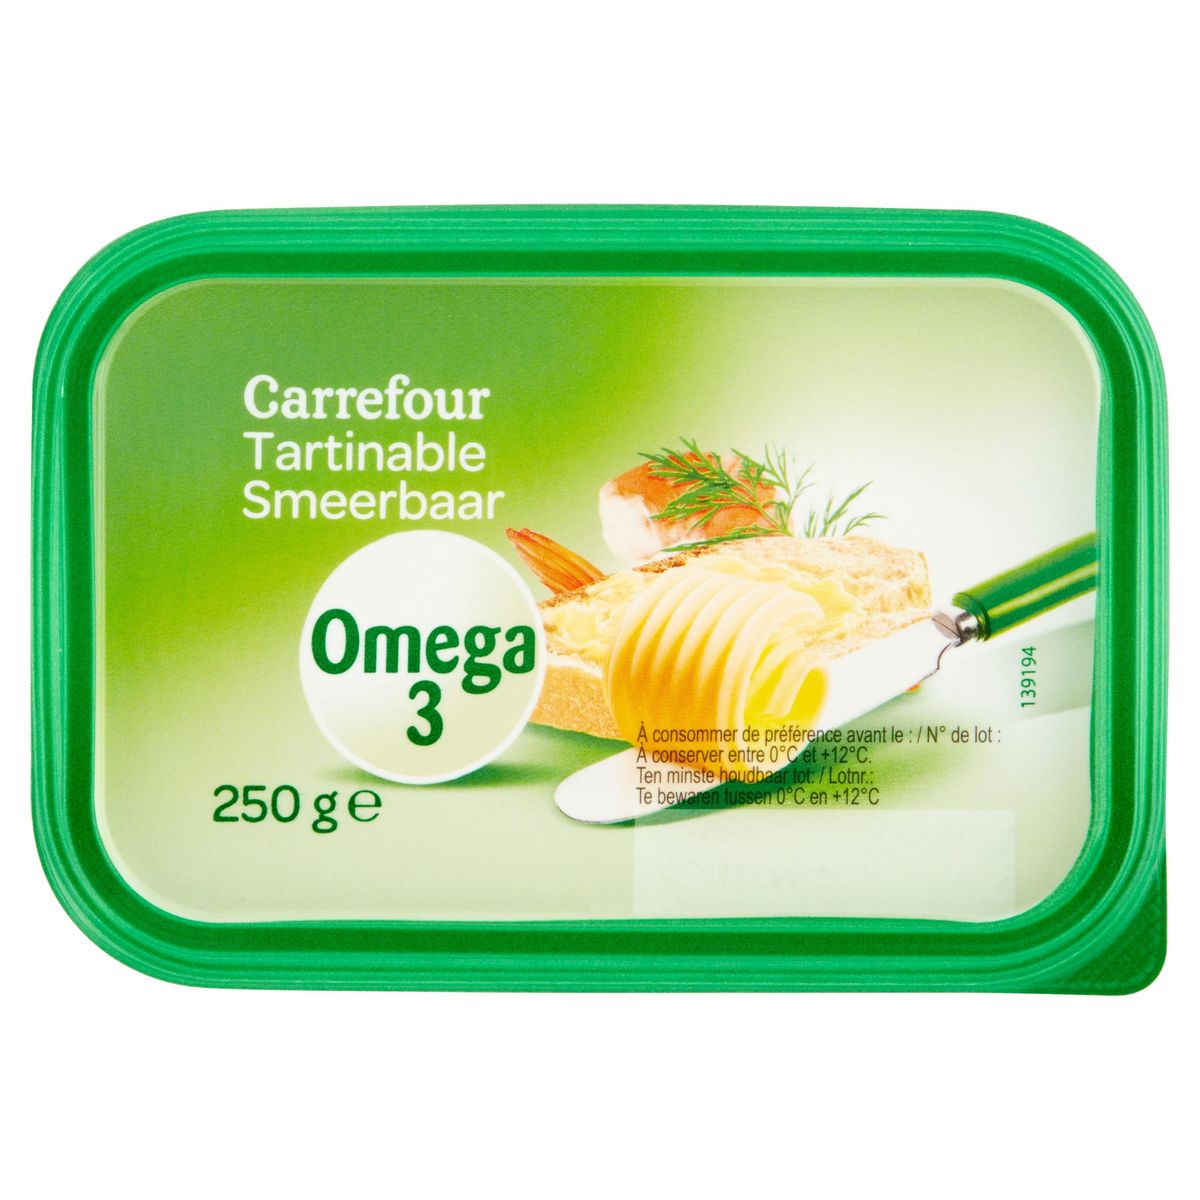 Carrefour Tartinable Omega 3 250 g